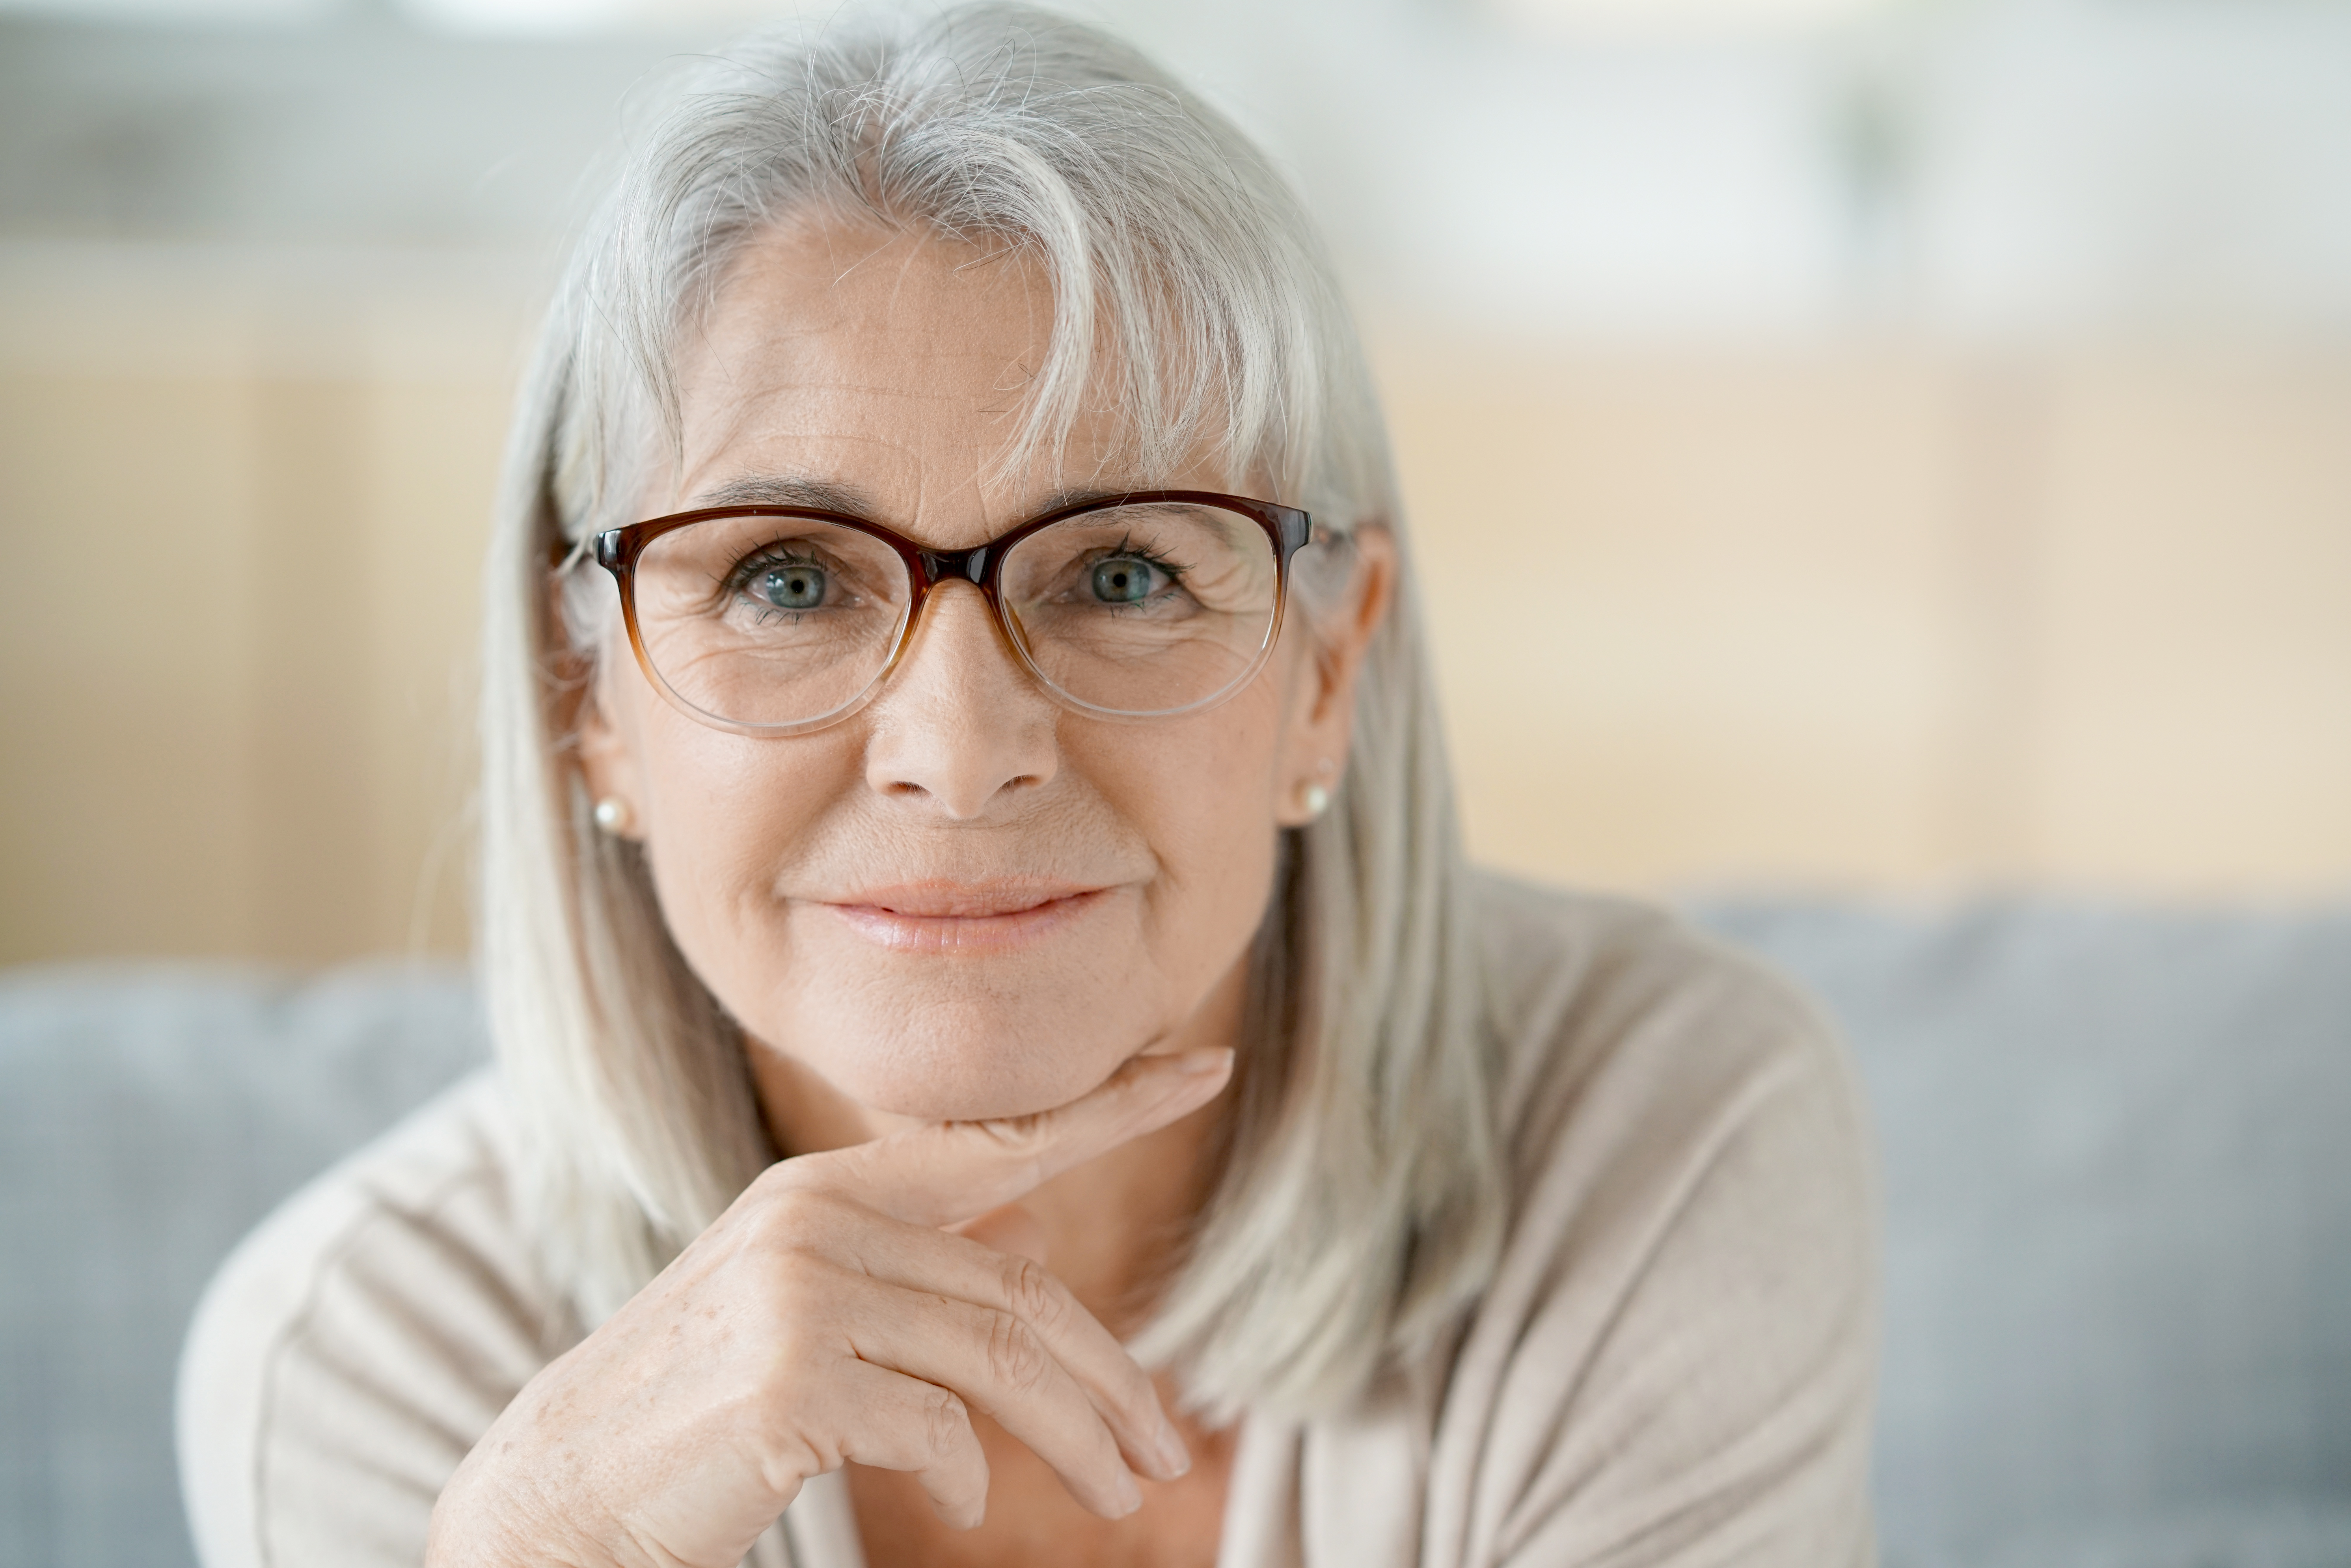 An elderly woman | Source: Shutterstock